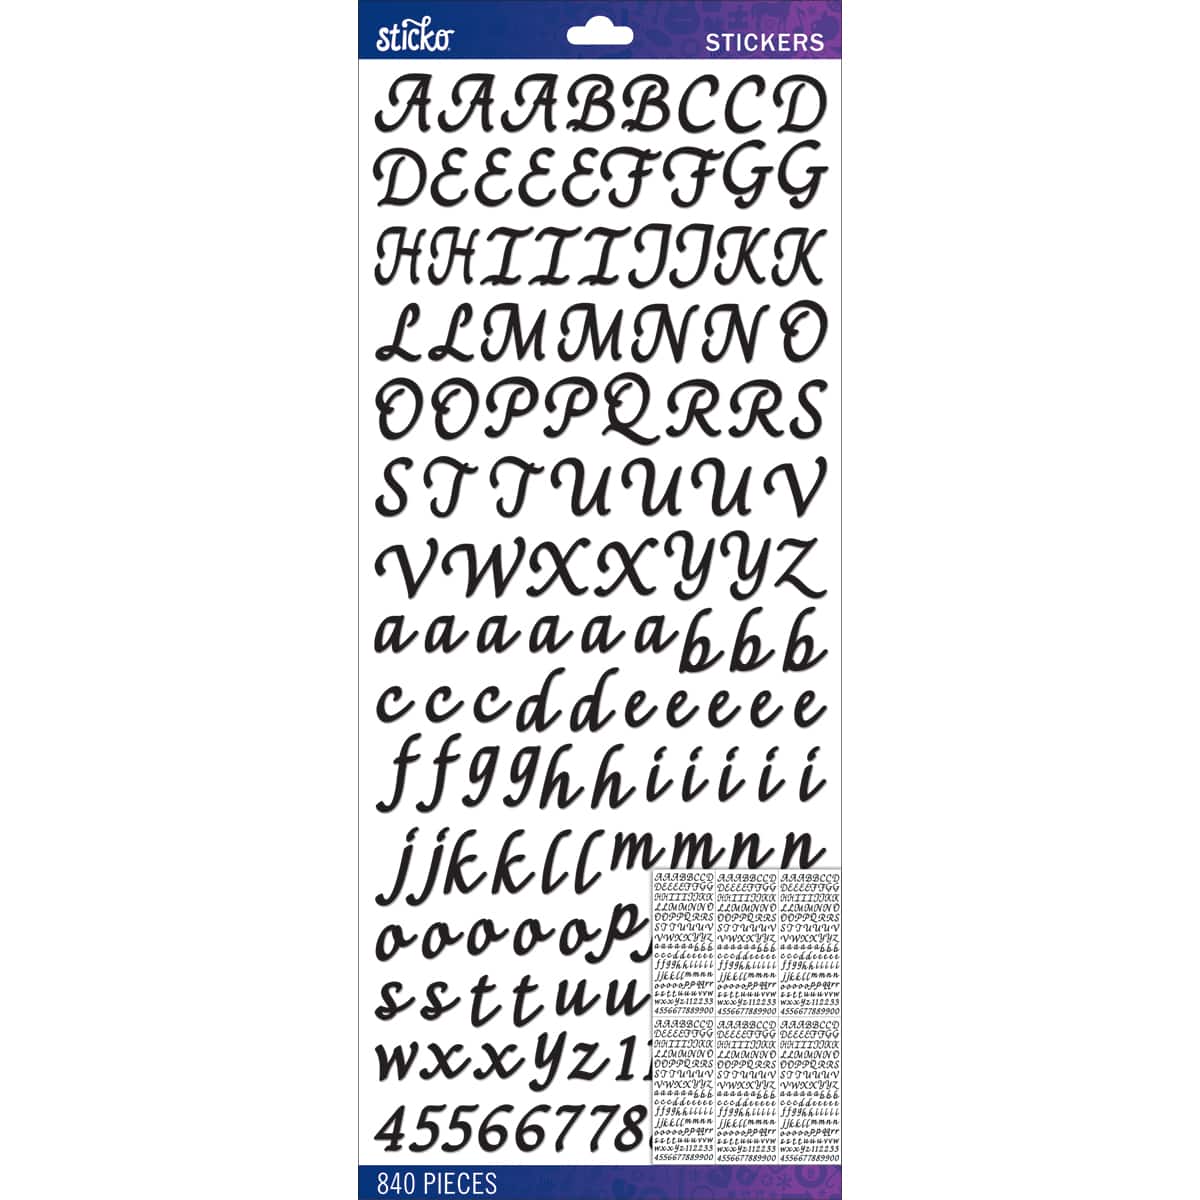 Sticko Alphabet Distressed Octavian Stickers, Small, Black